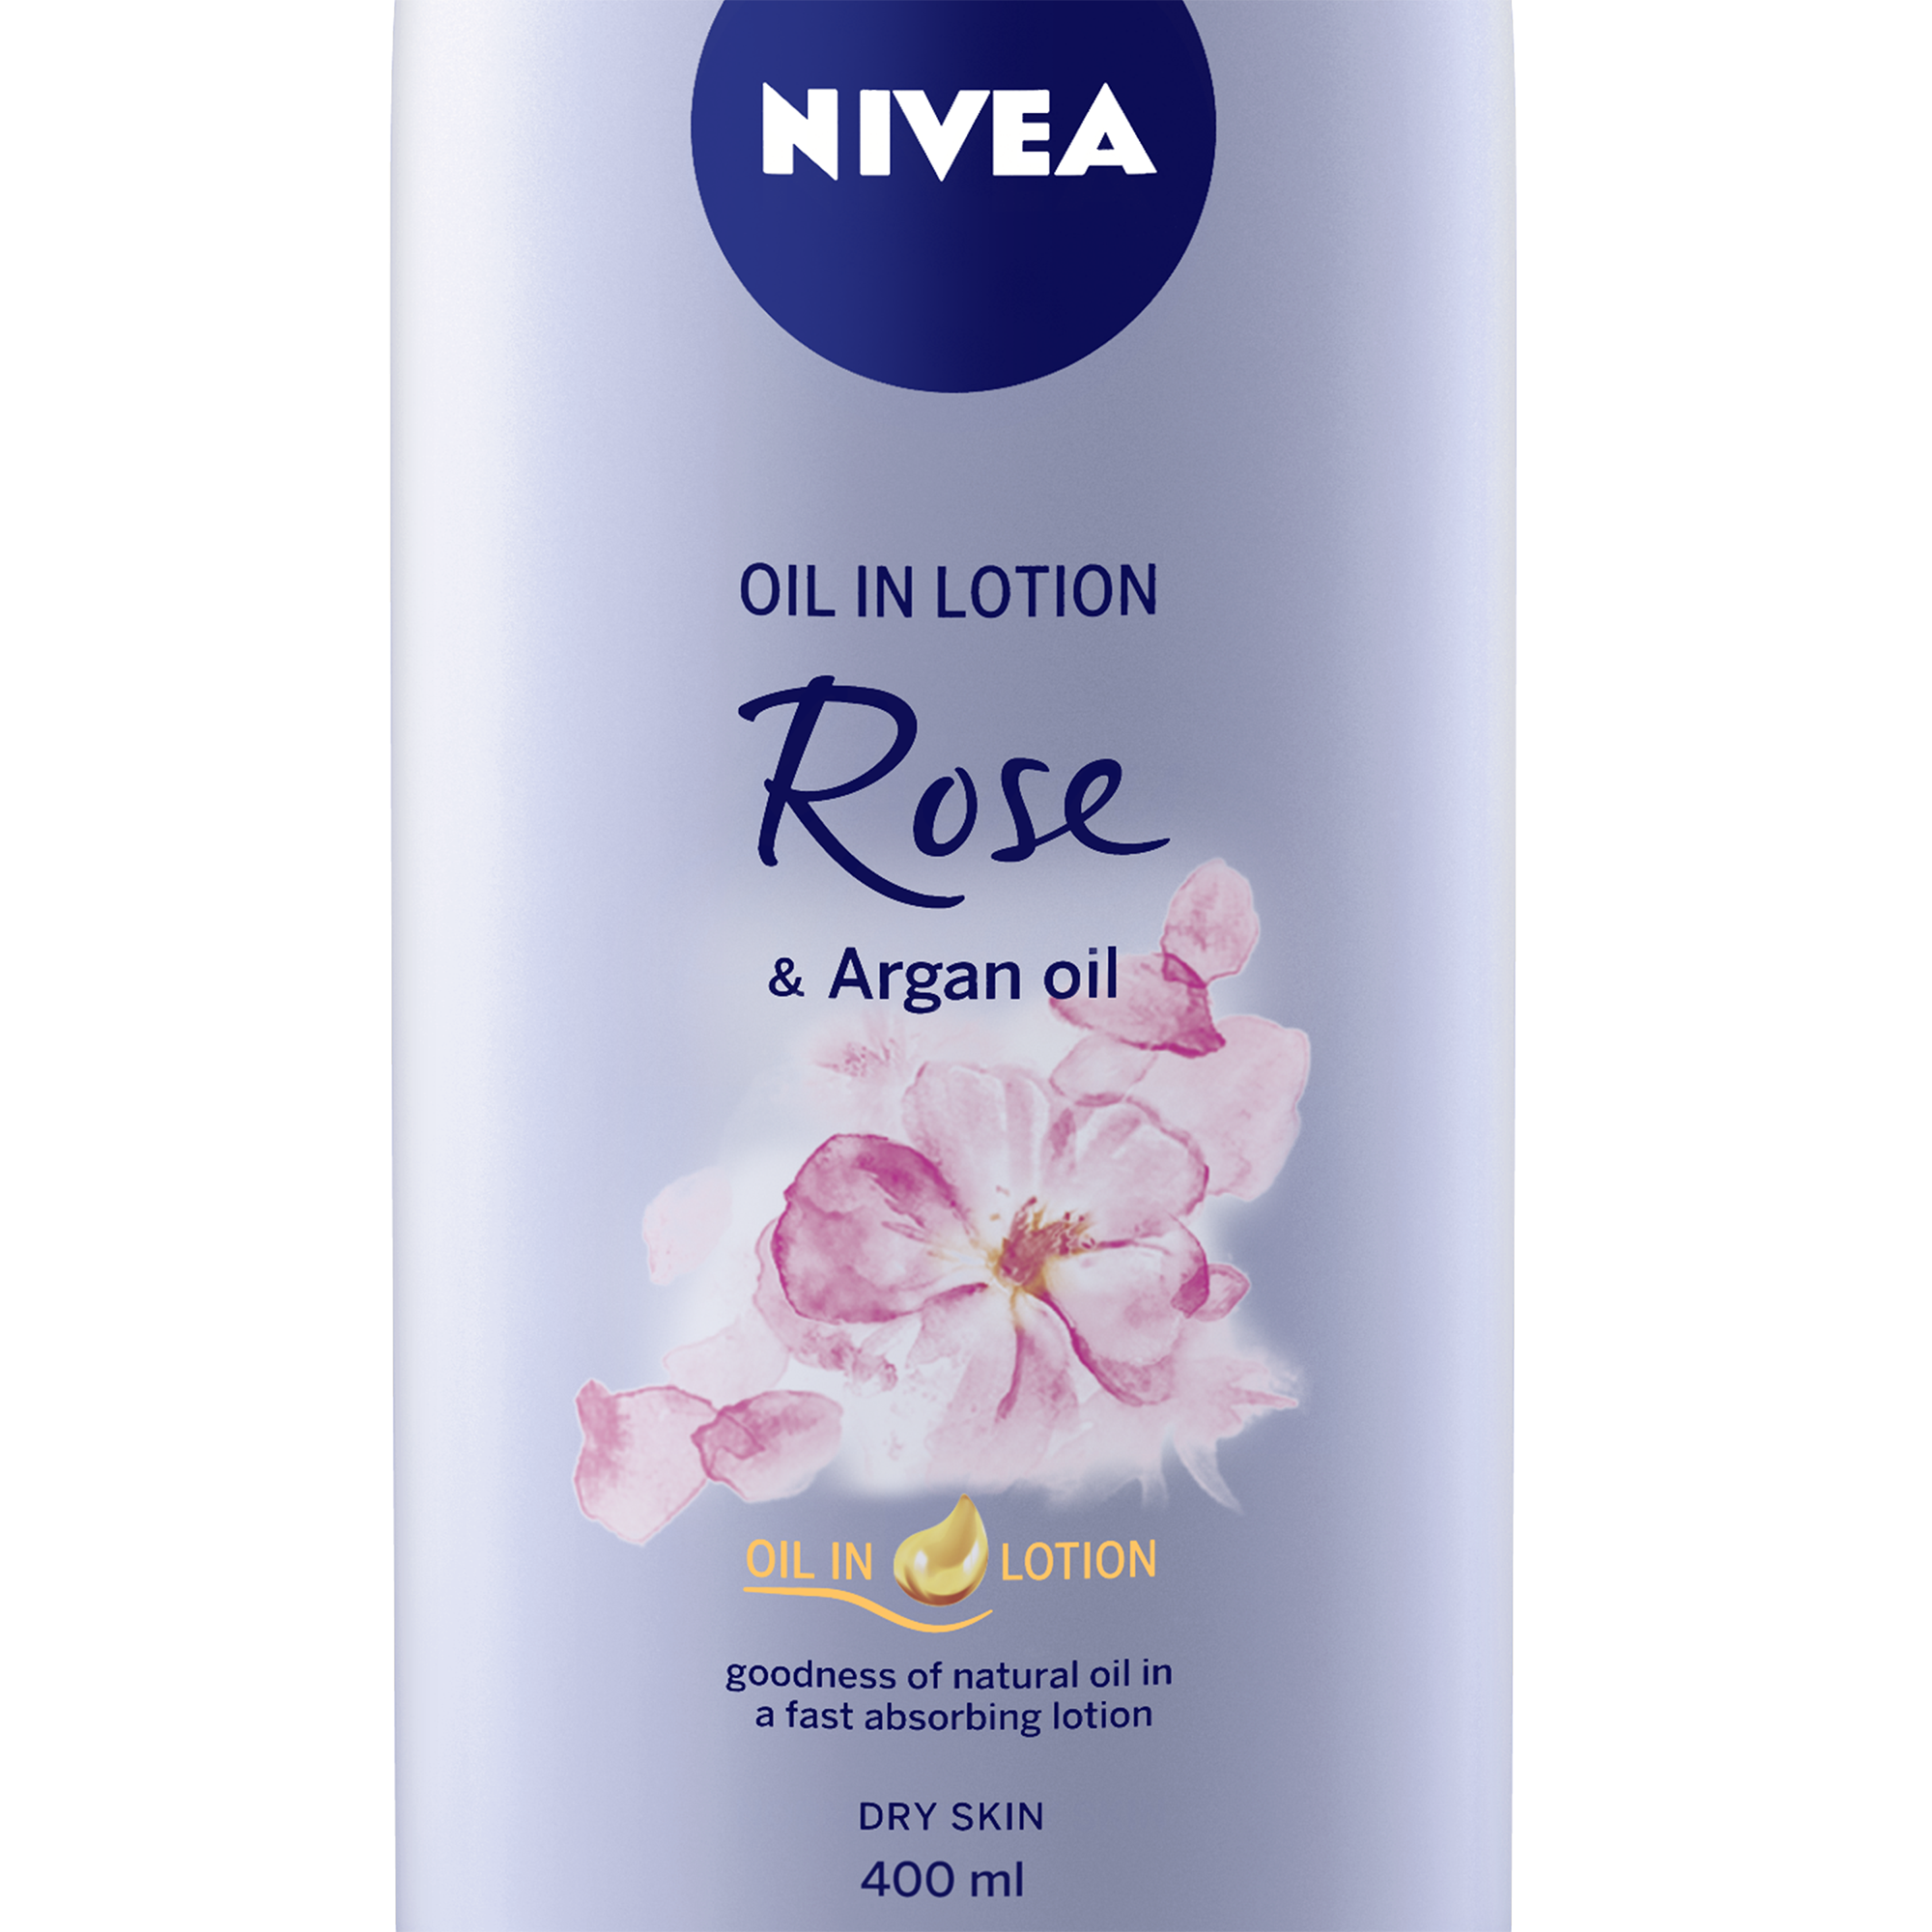 Nivea Oil in Lotion Rose & Argan Oil Body Lotion (400 ml) Nivea